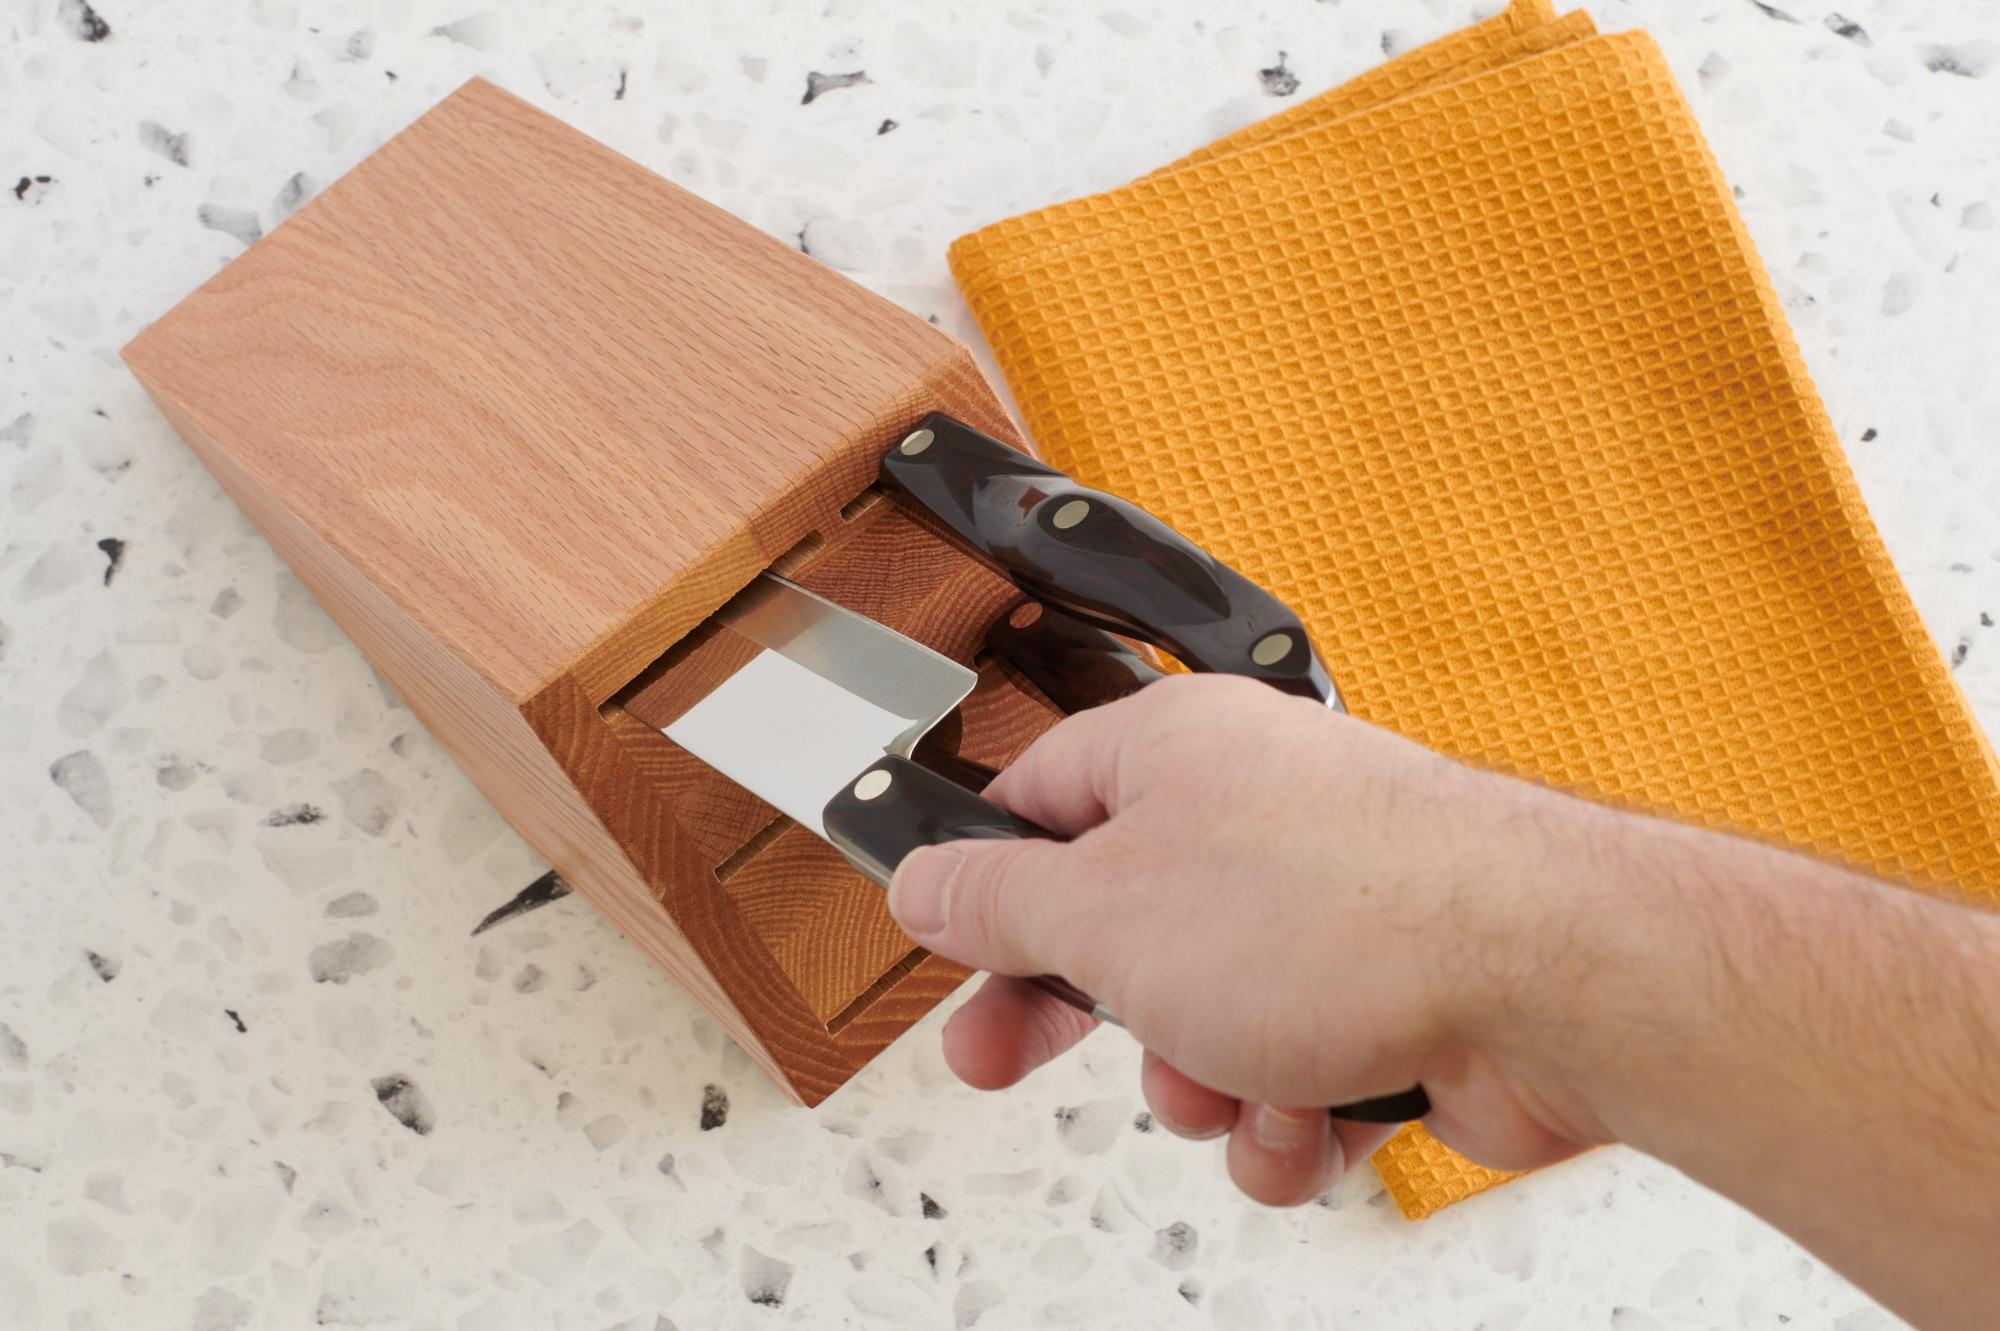 Placing knife in wood block.